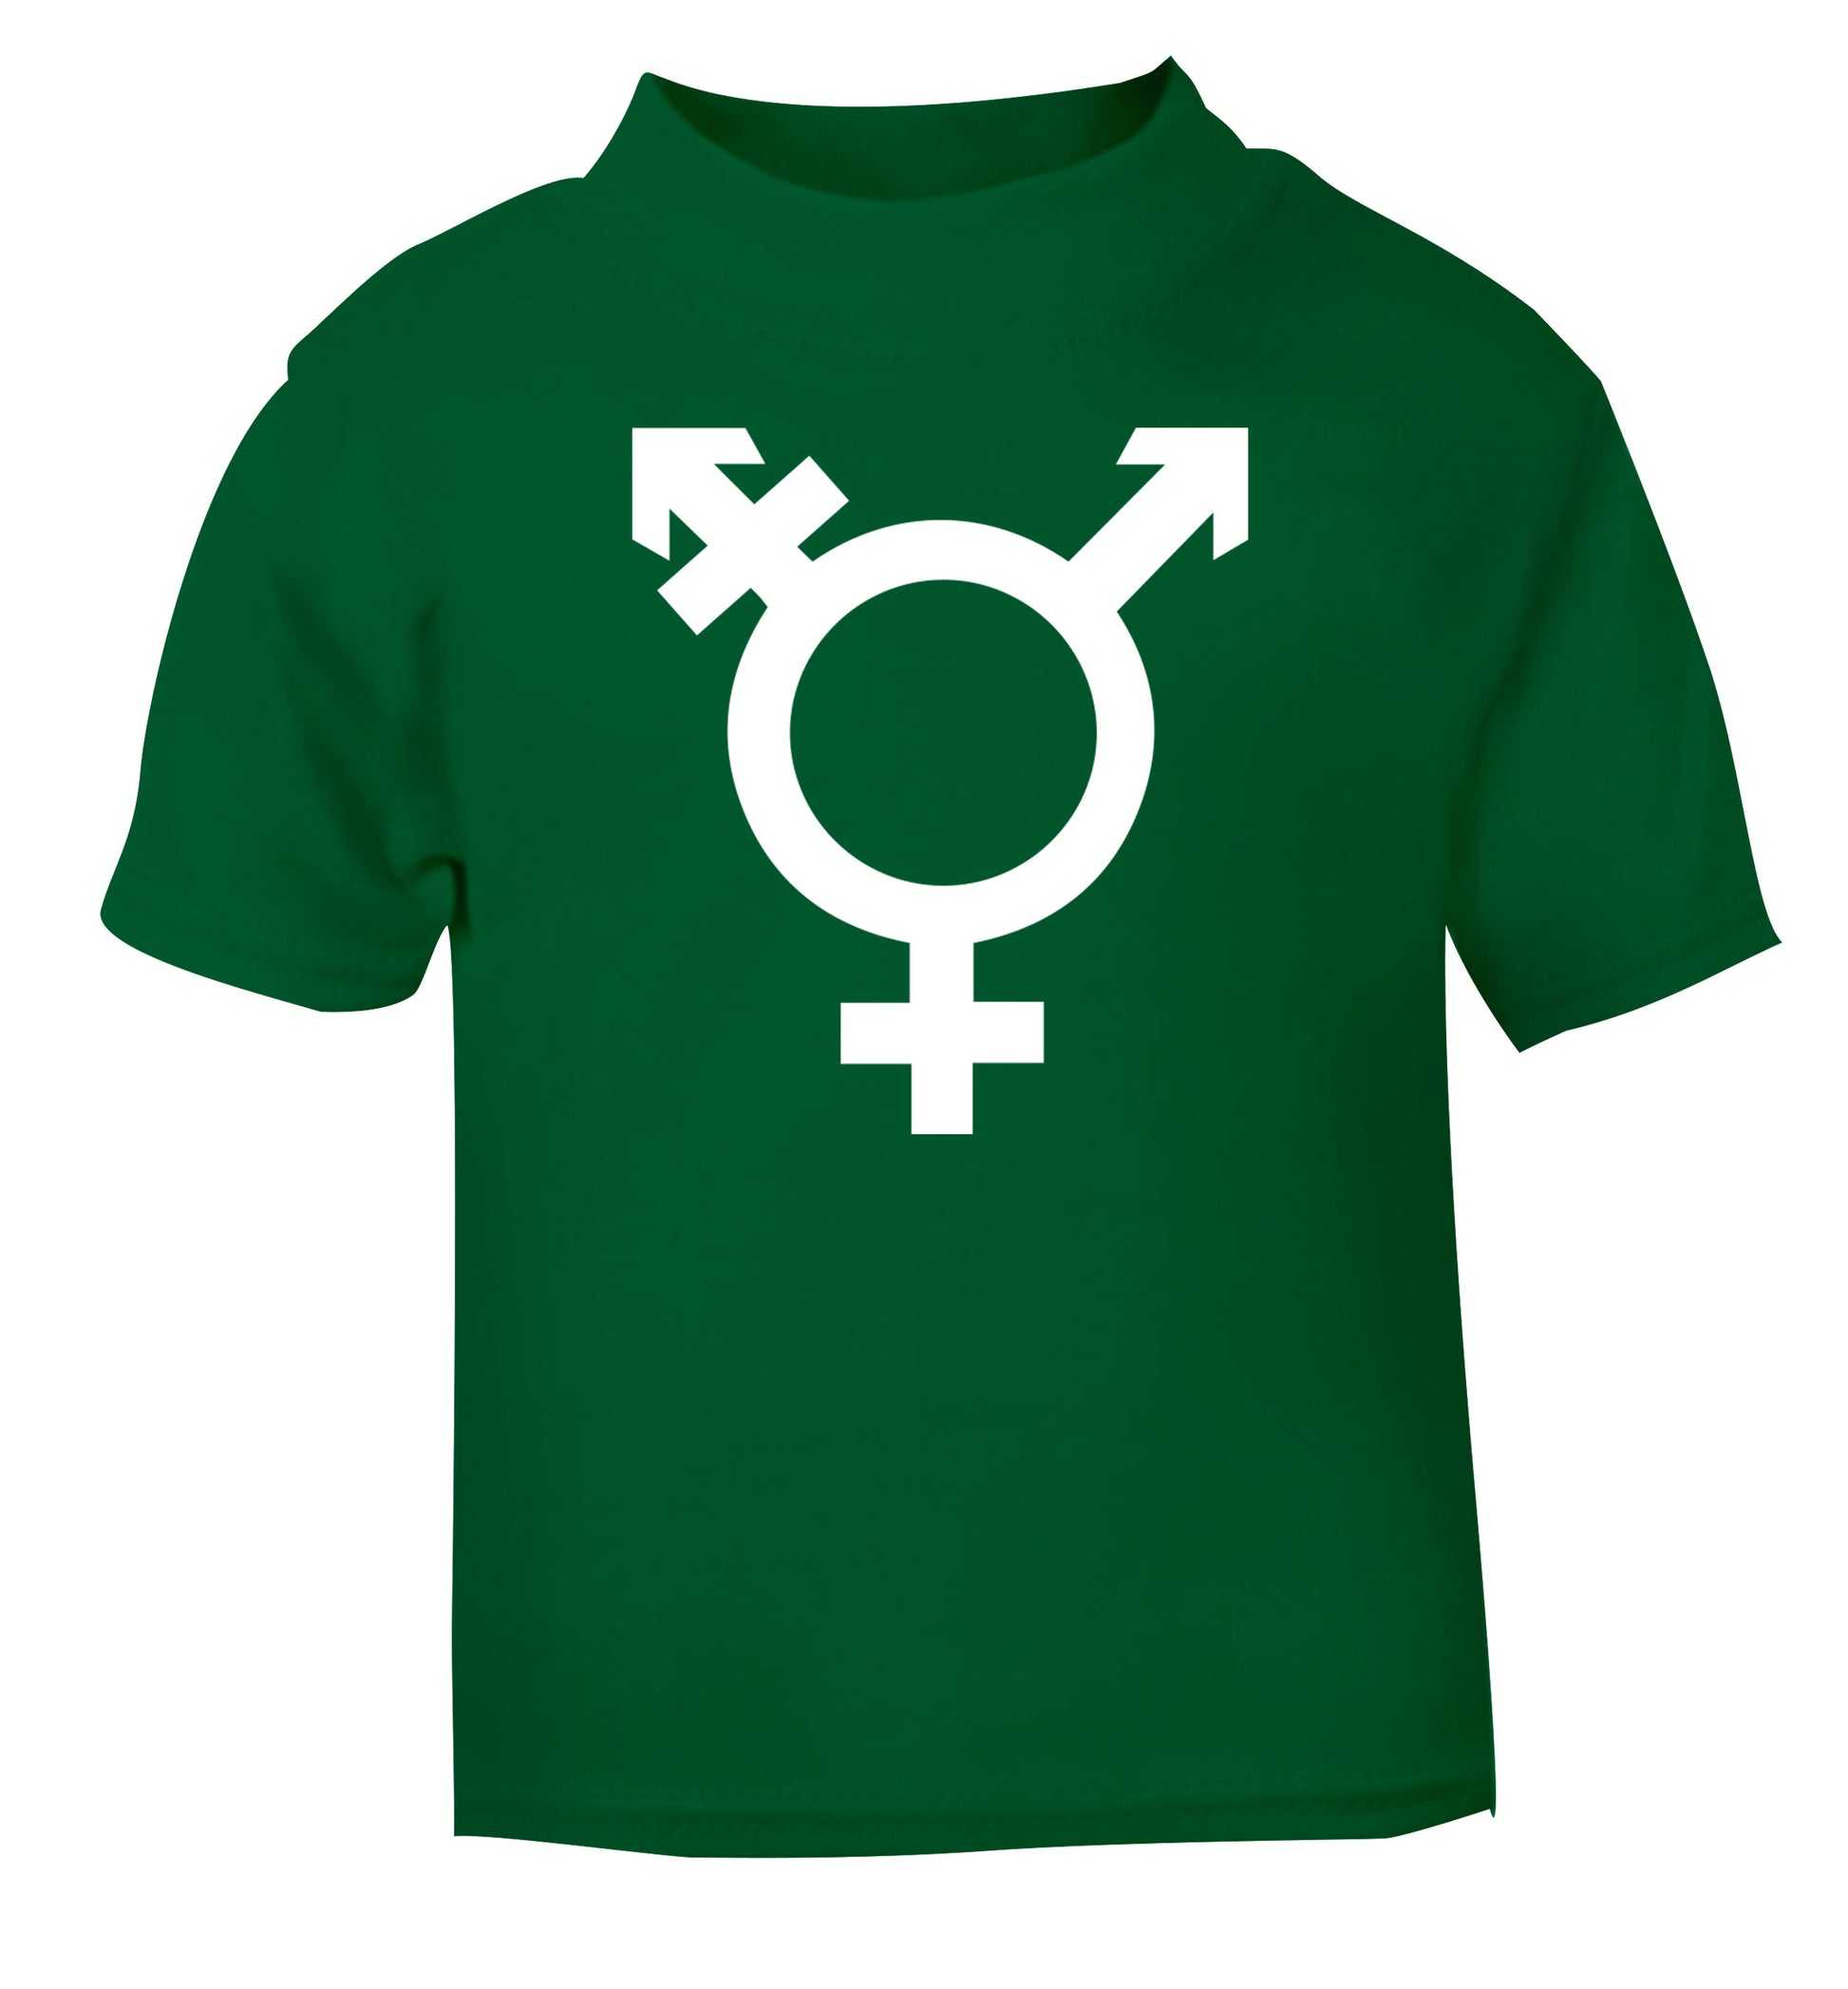 Gender neutral symbol large green Baby Toddler Tshirt 2 Years